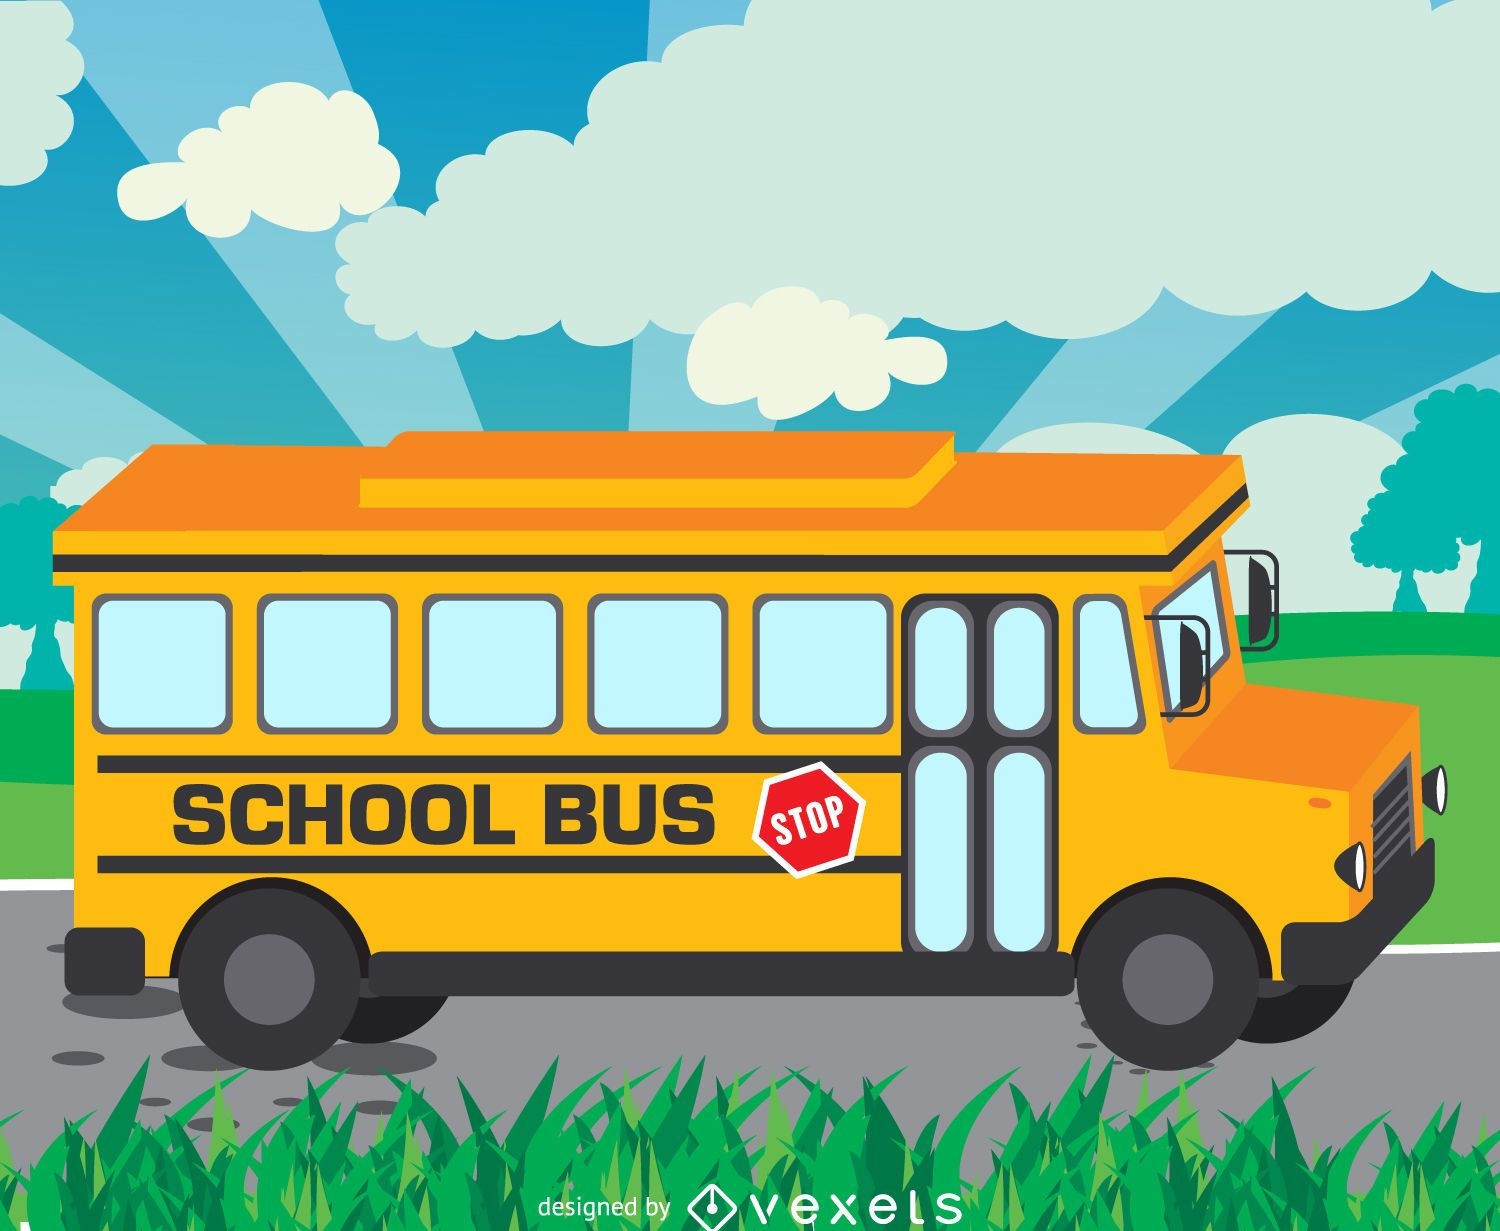 School bus illustration on road